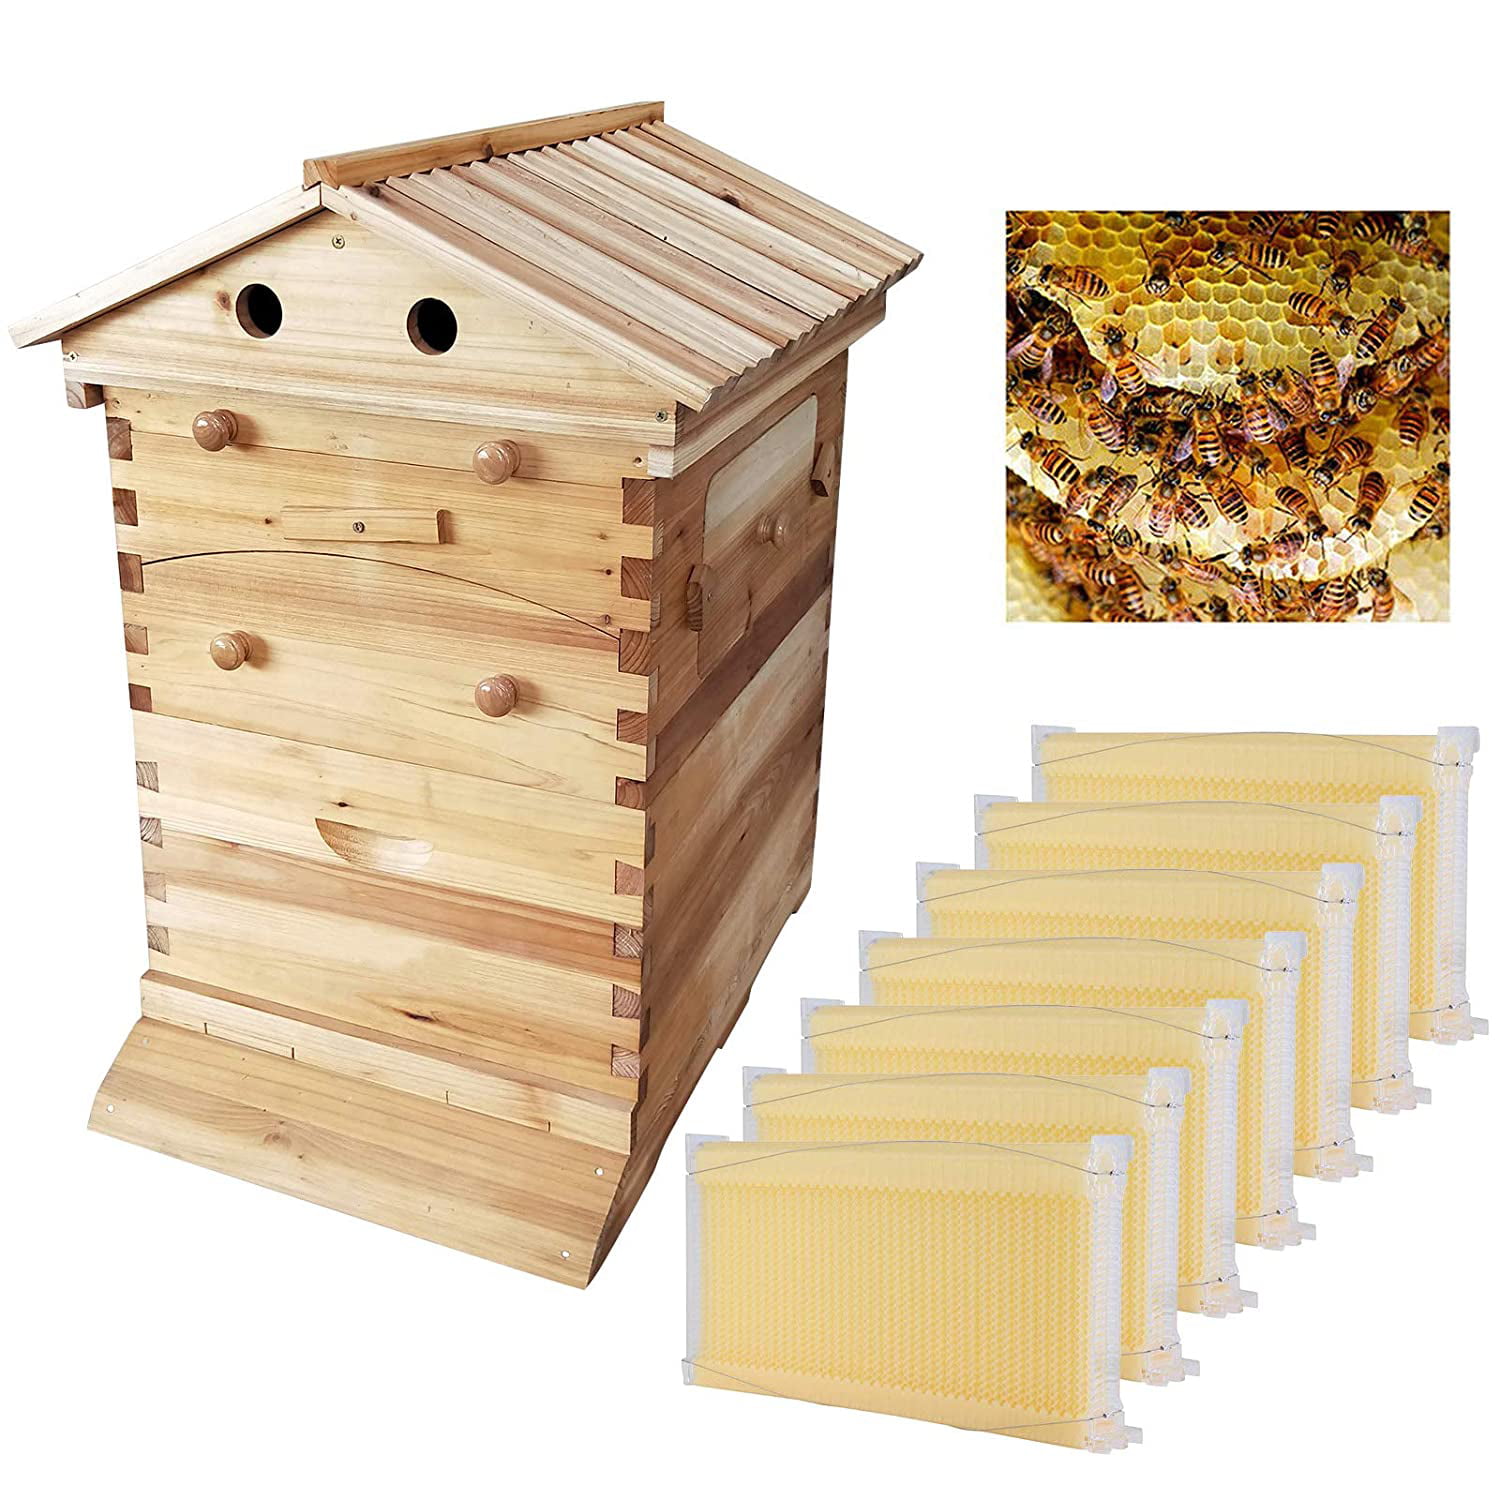 Auto Honey Beehive Frames Beekeeping Tool Kit Bee Hive King Box Pollination Box 